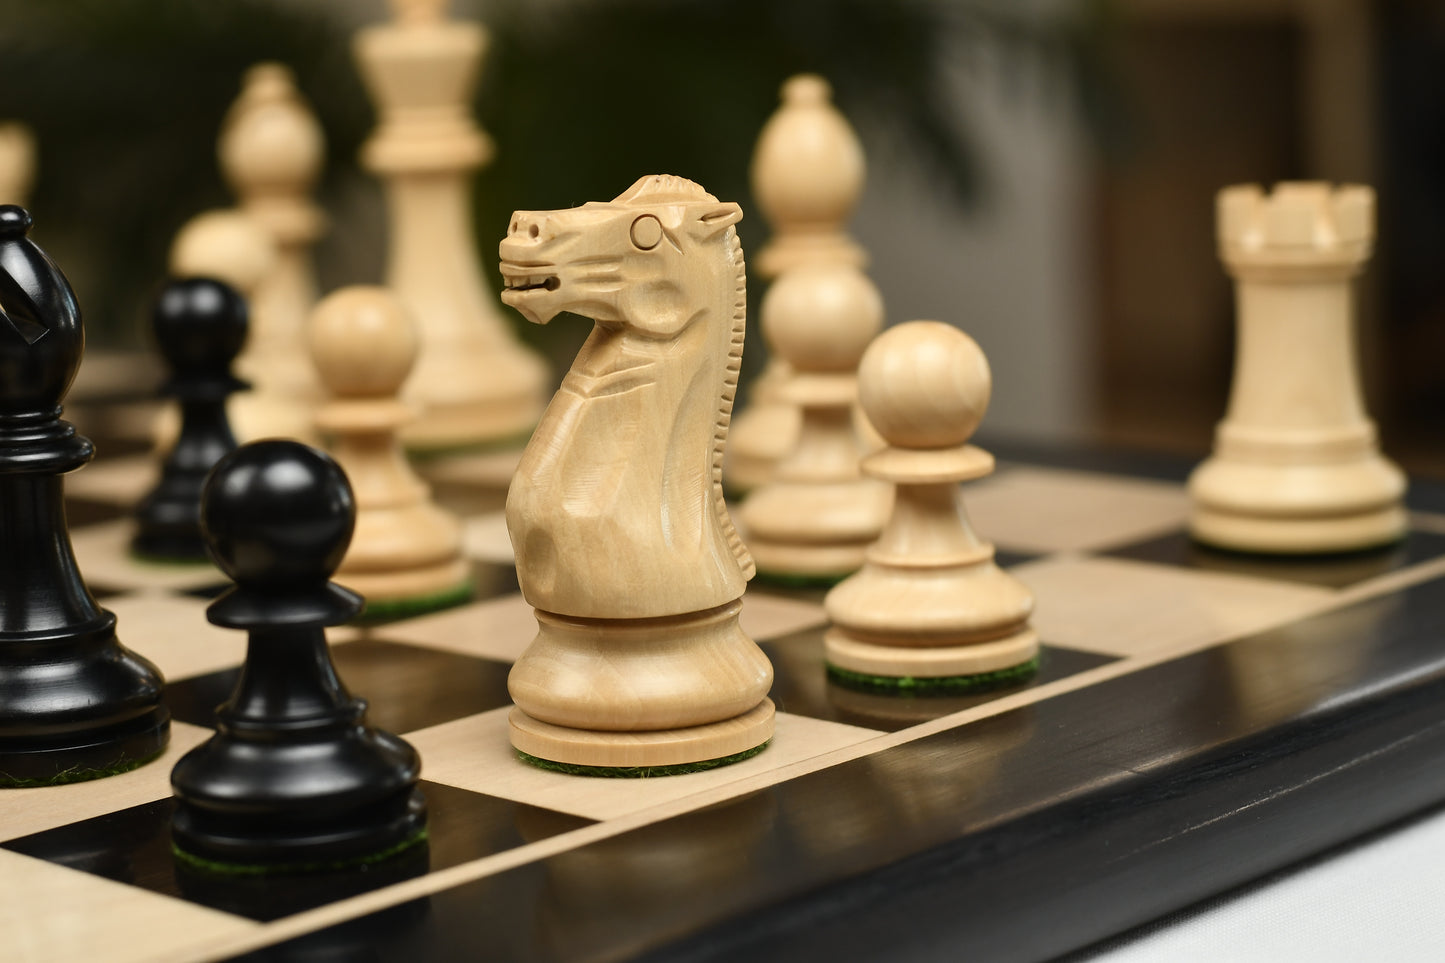 The CB Grandmaster Staunton Series Chess Pieces - 3.75" King in Ebonized Boxwood & Natural Boxwood